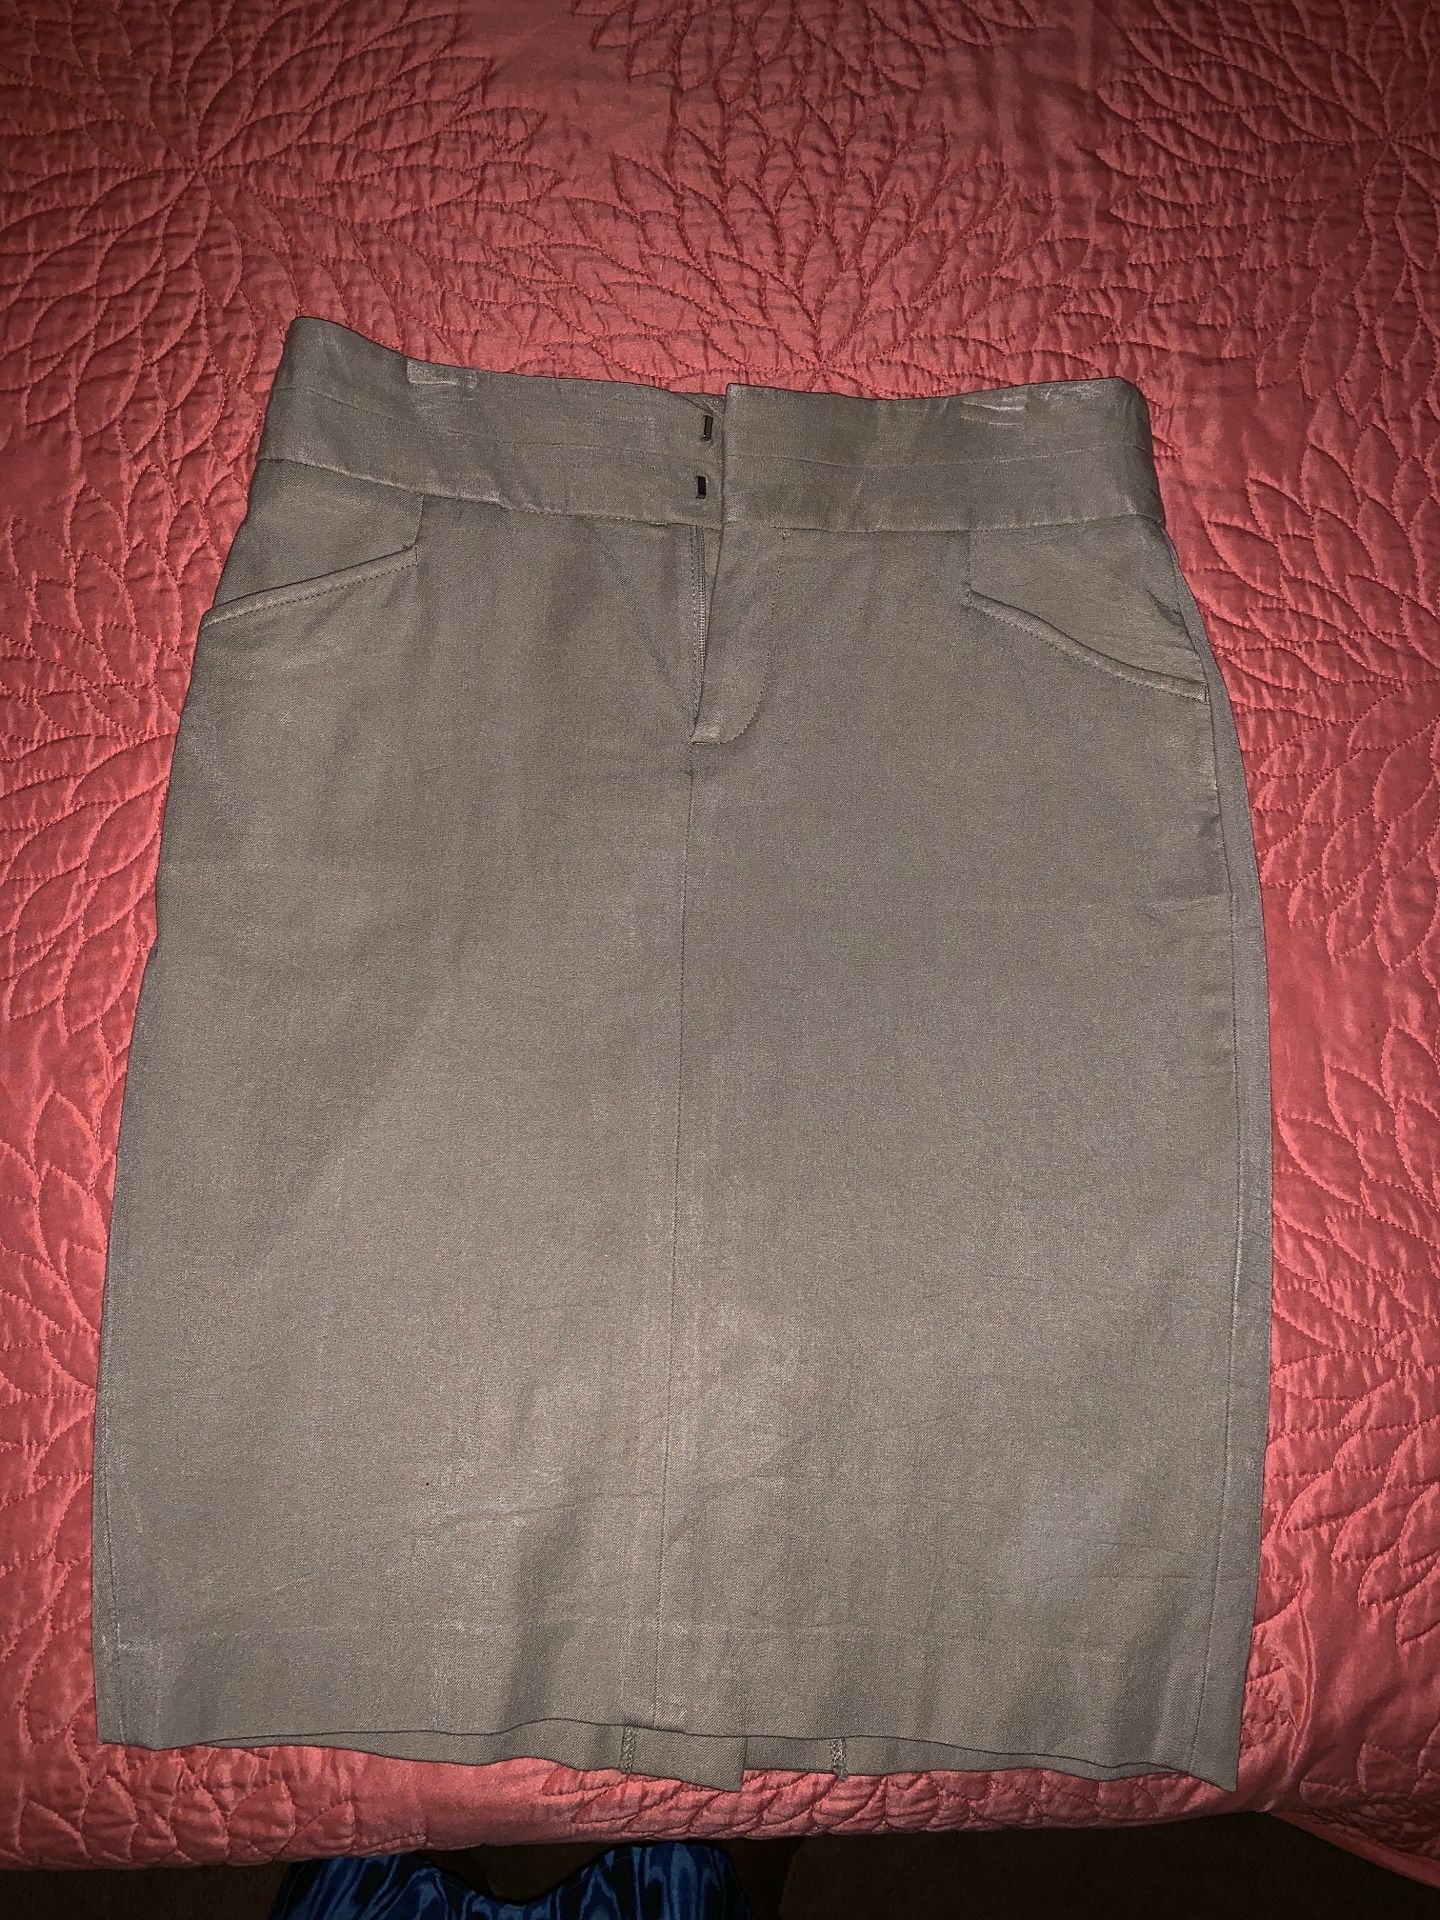 Pencil skirt size 2